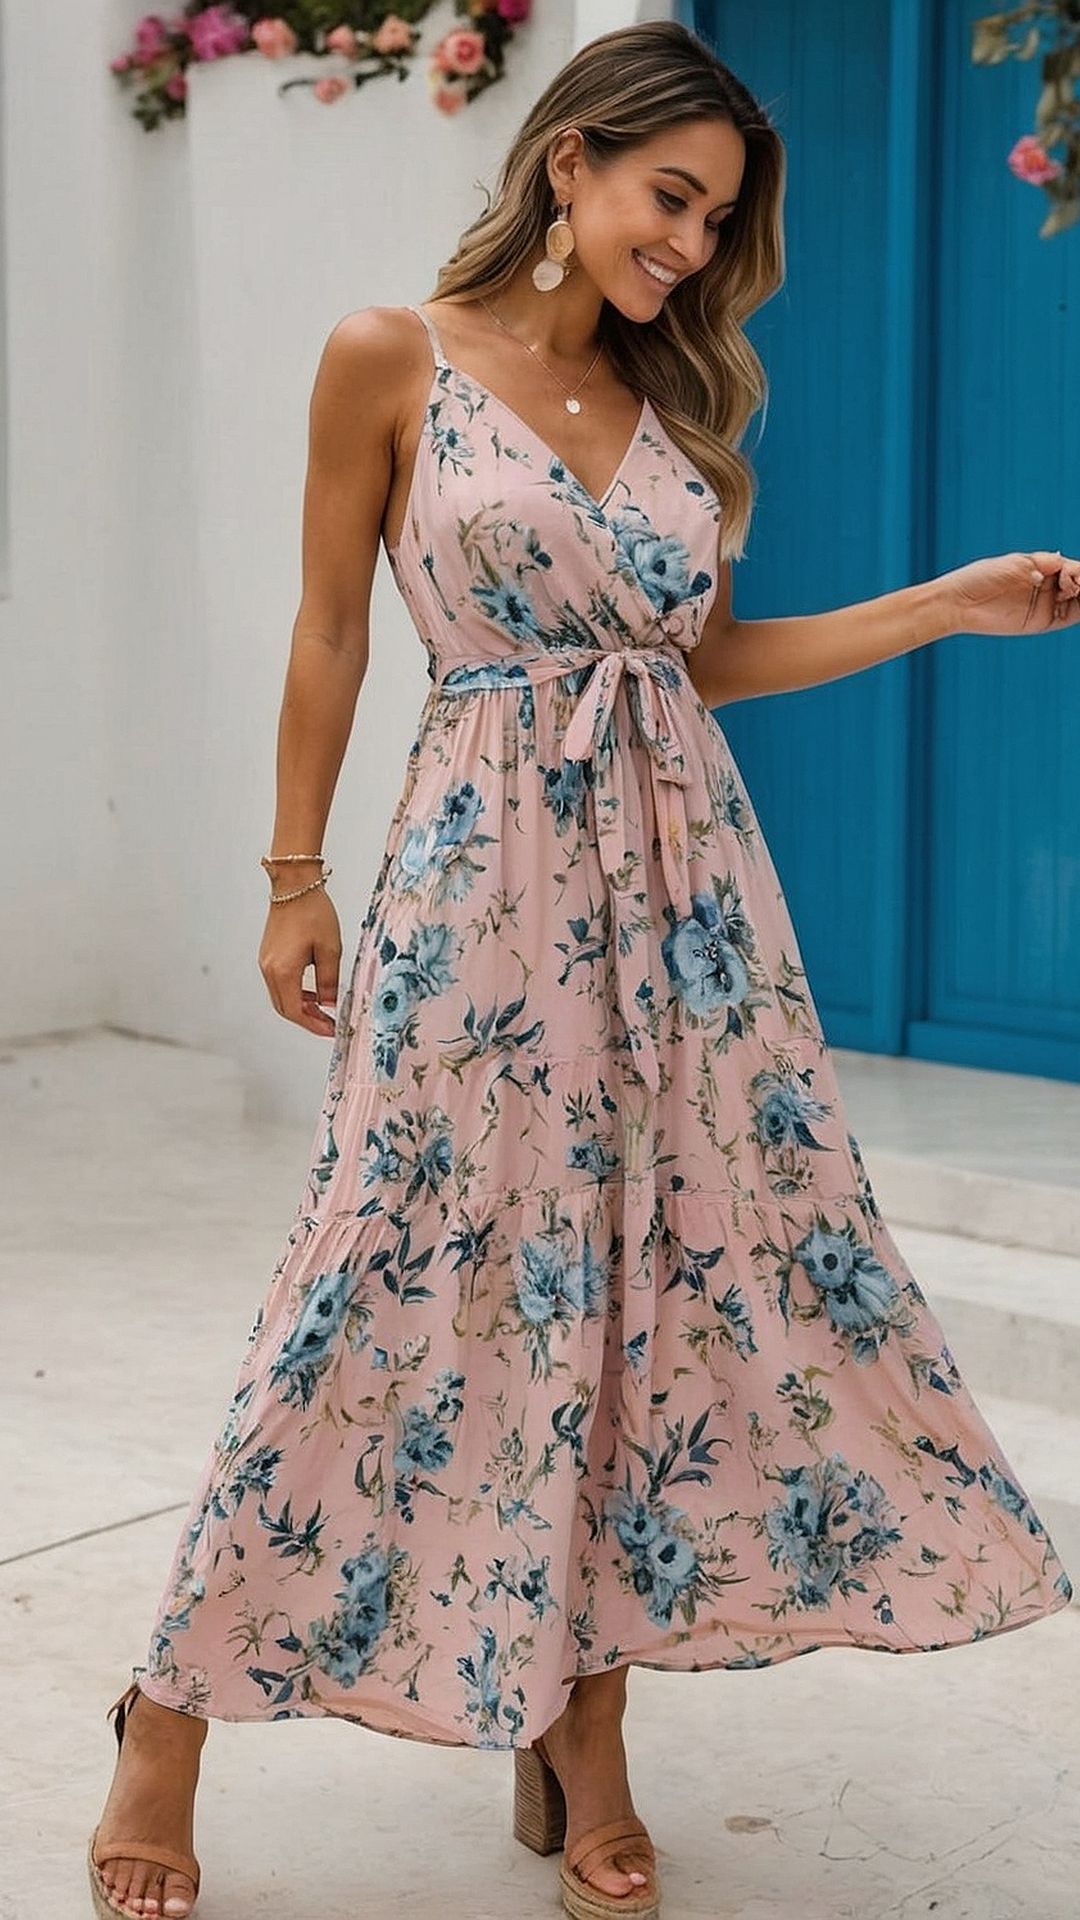 In Full Bloom: Floral Maxi Dress Showcase